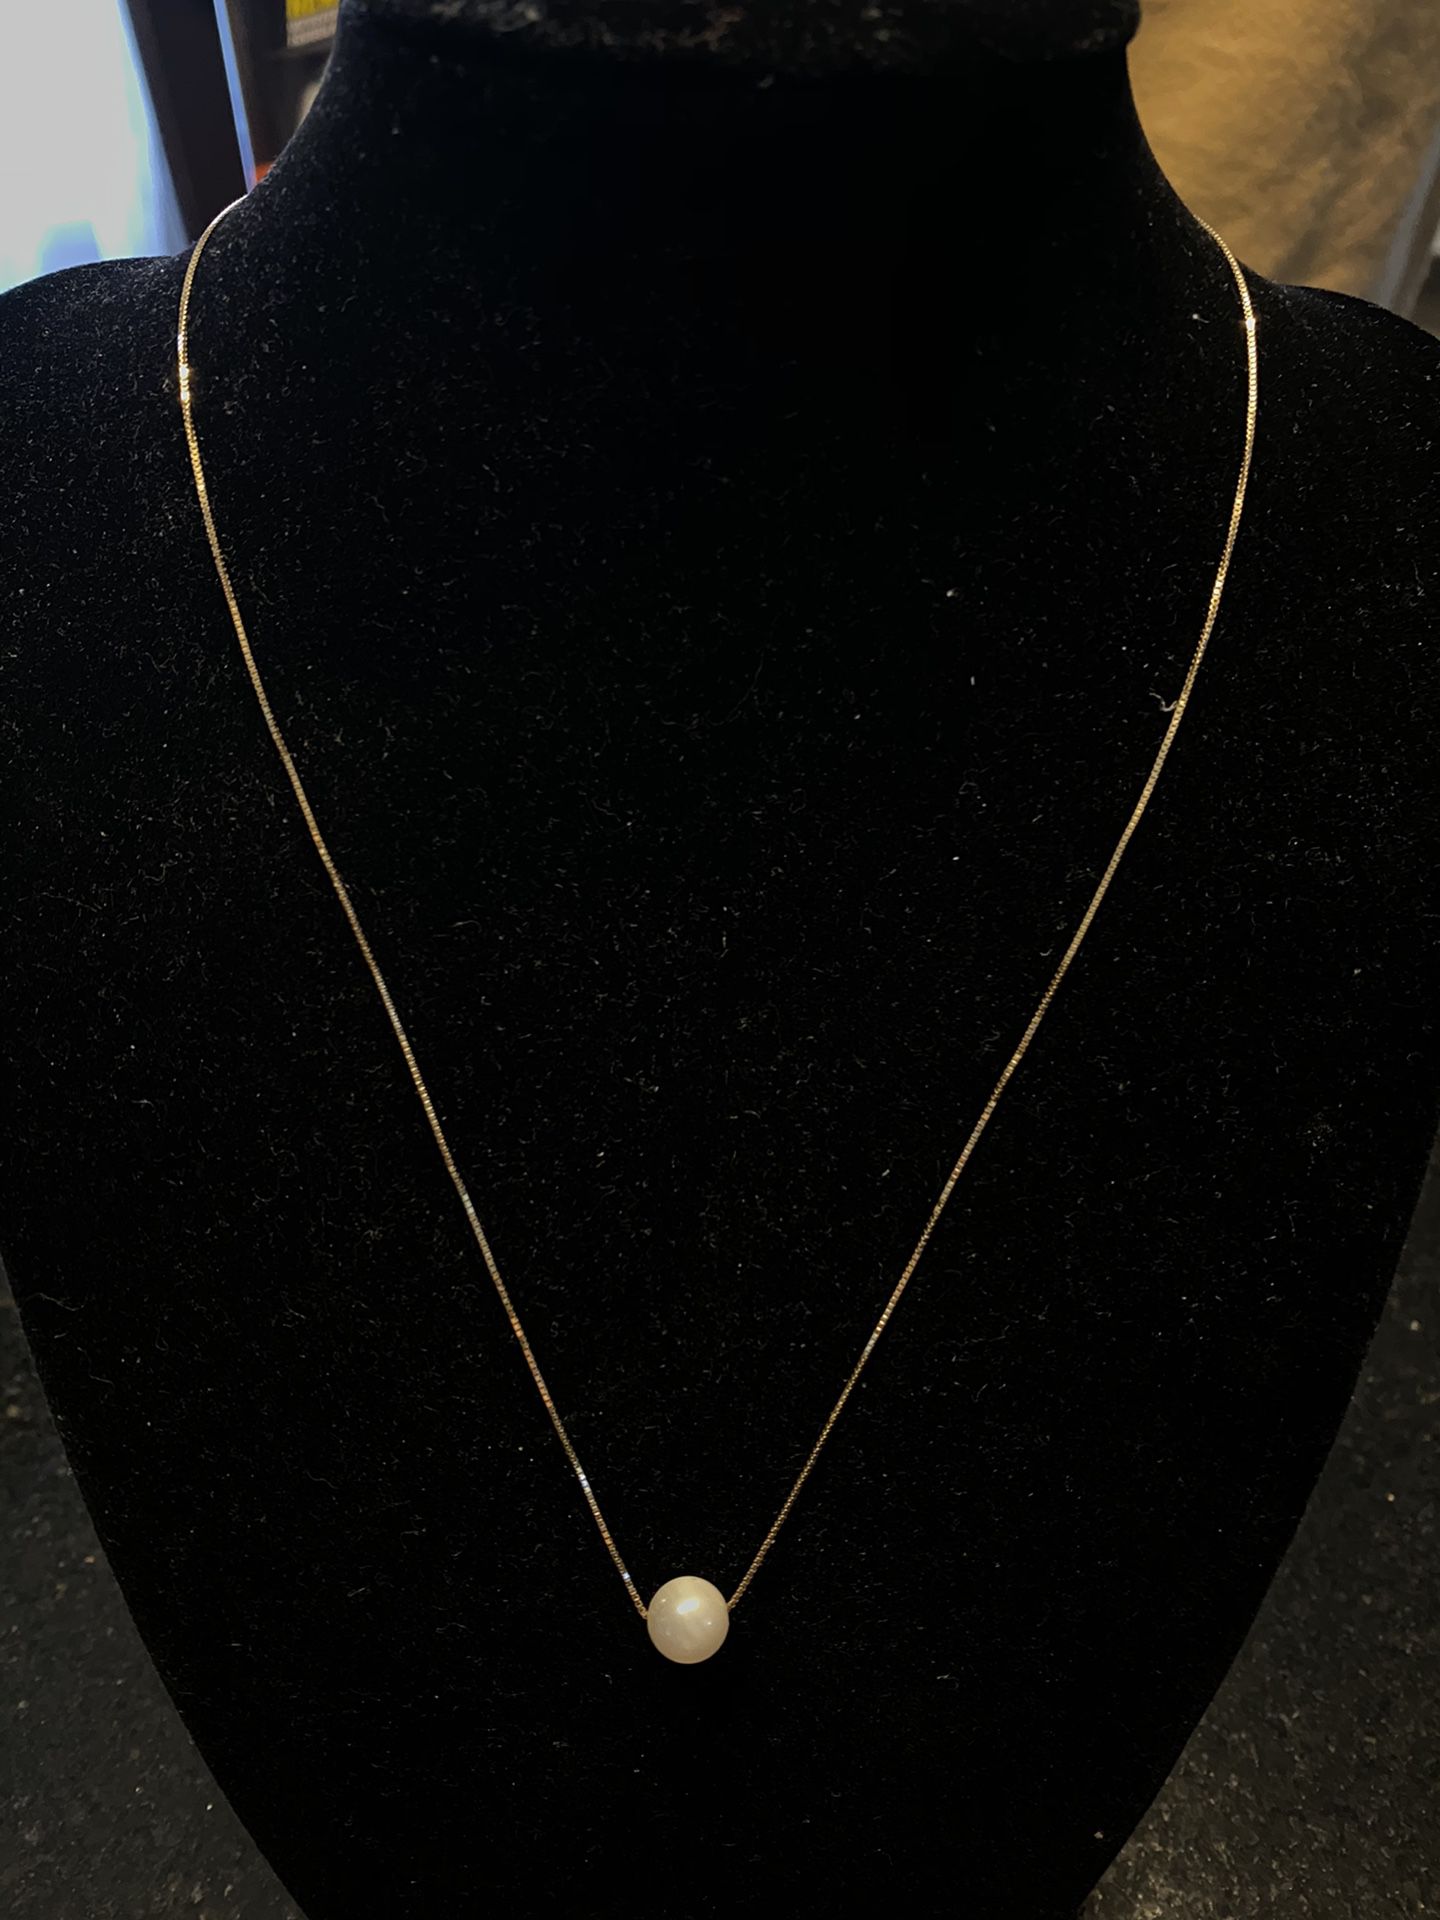 10k gold genuine pearl chain. 16 inches